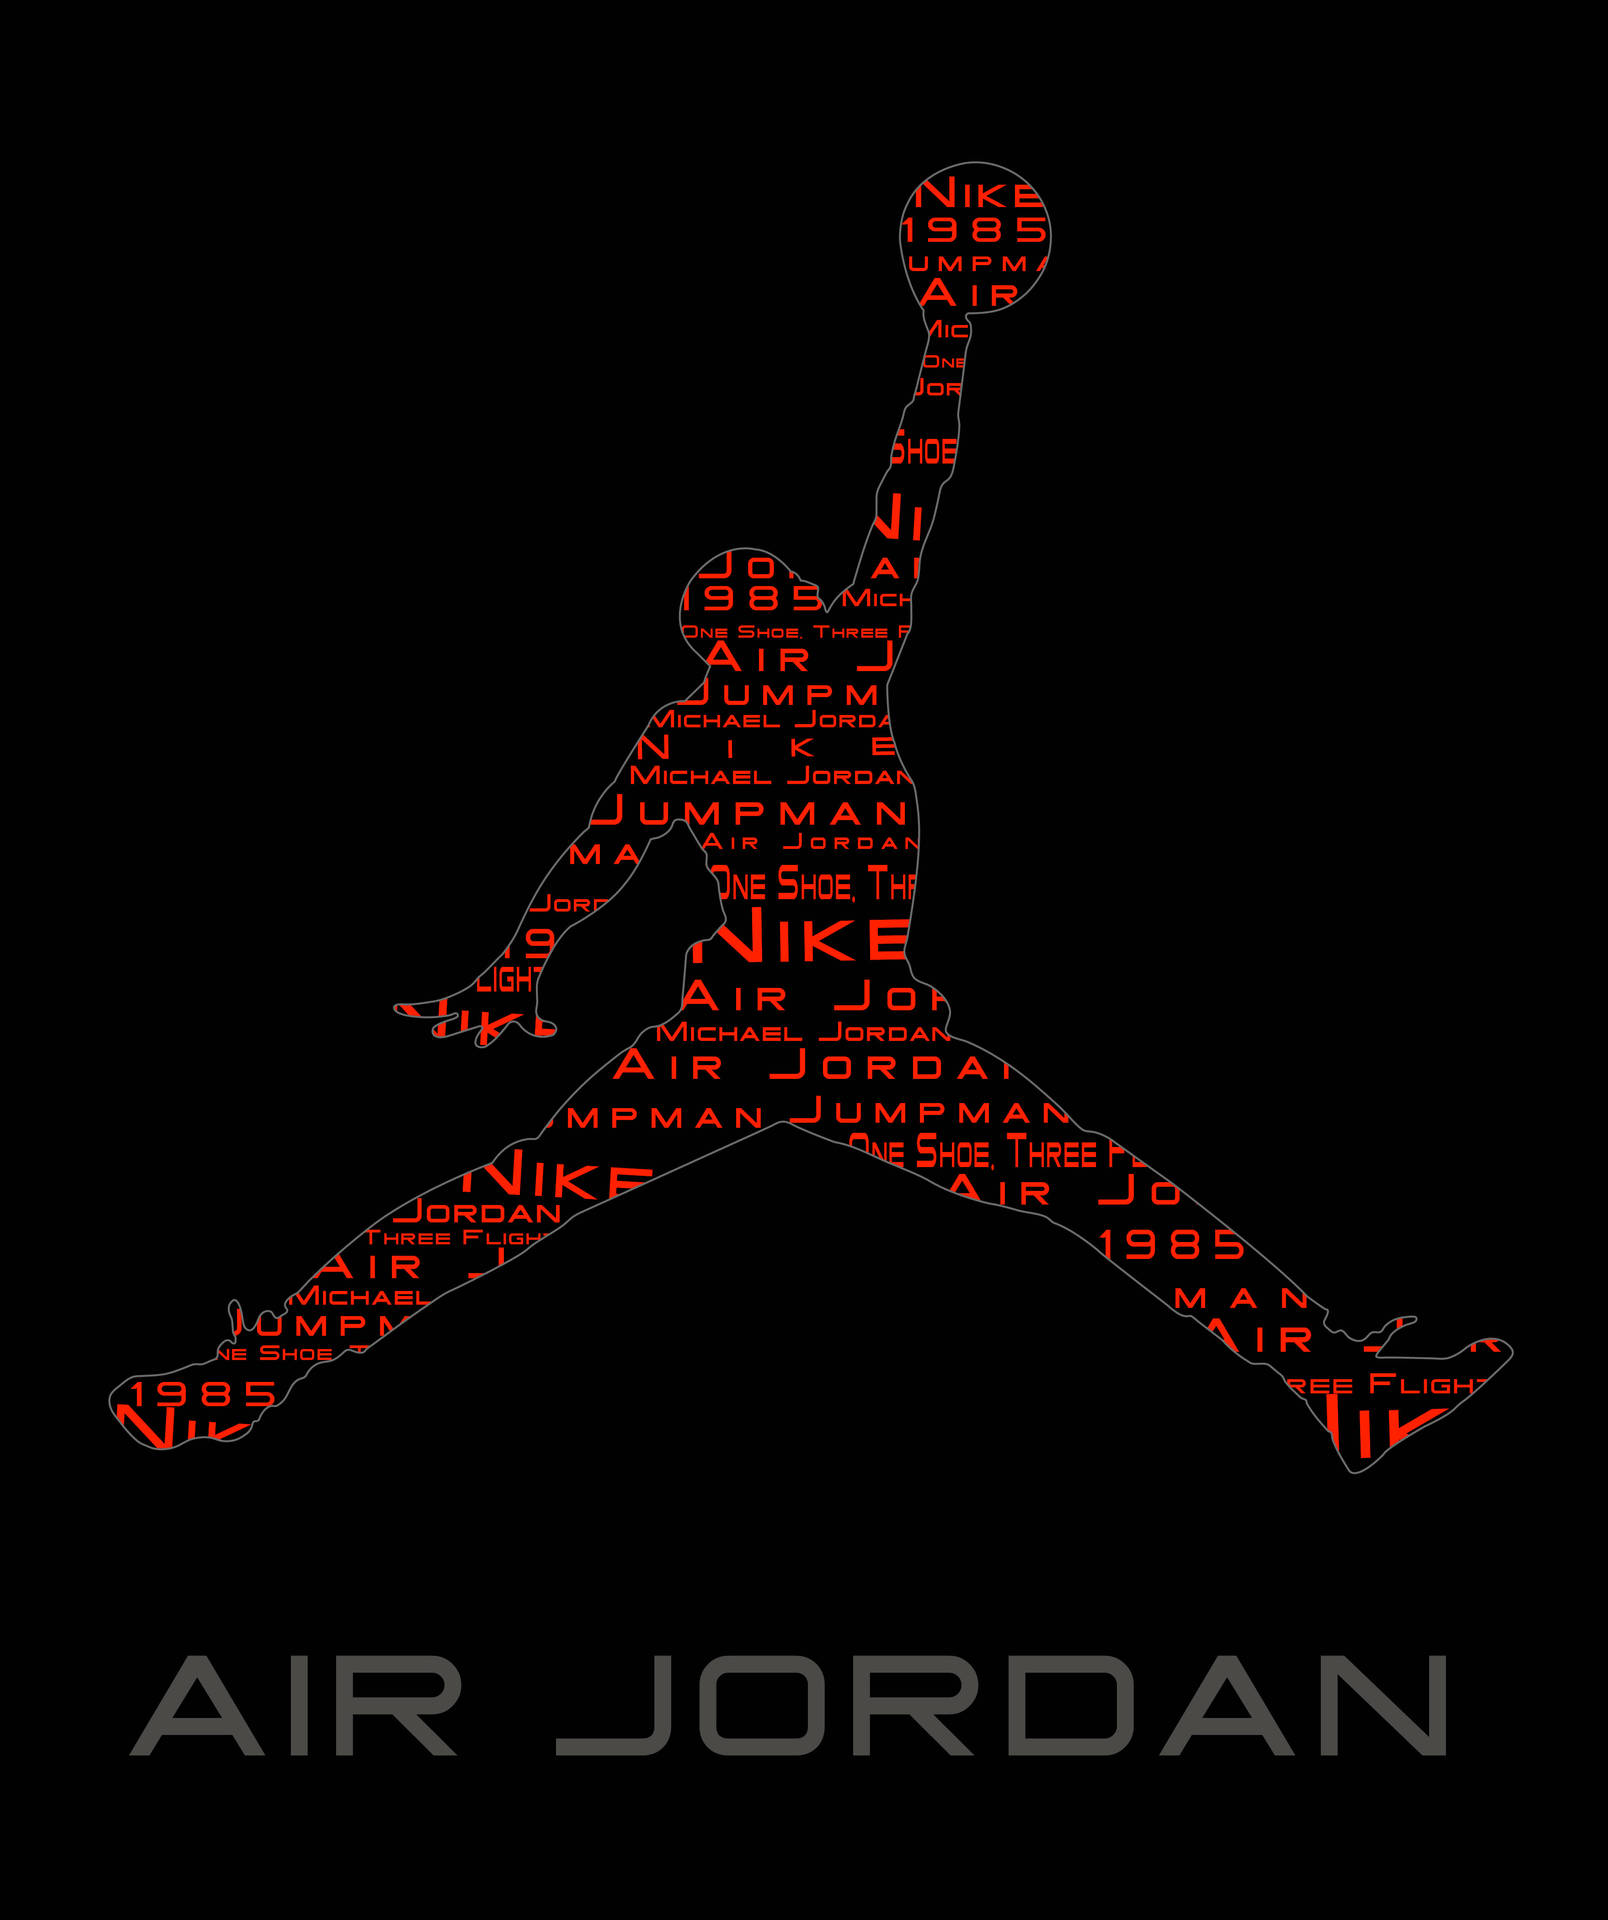 Jordan Logo 3517X4200 Wallpaper and Background Image